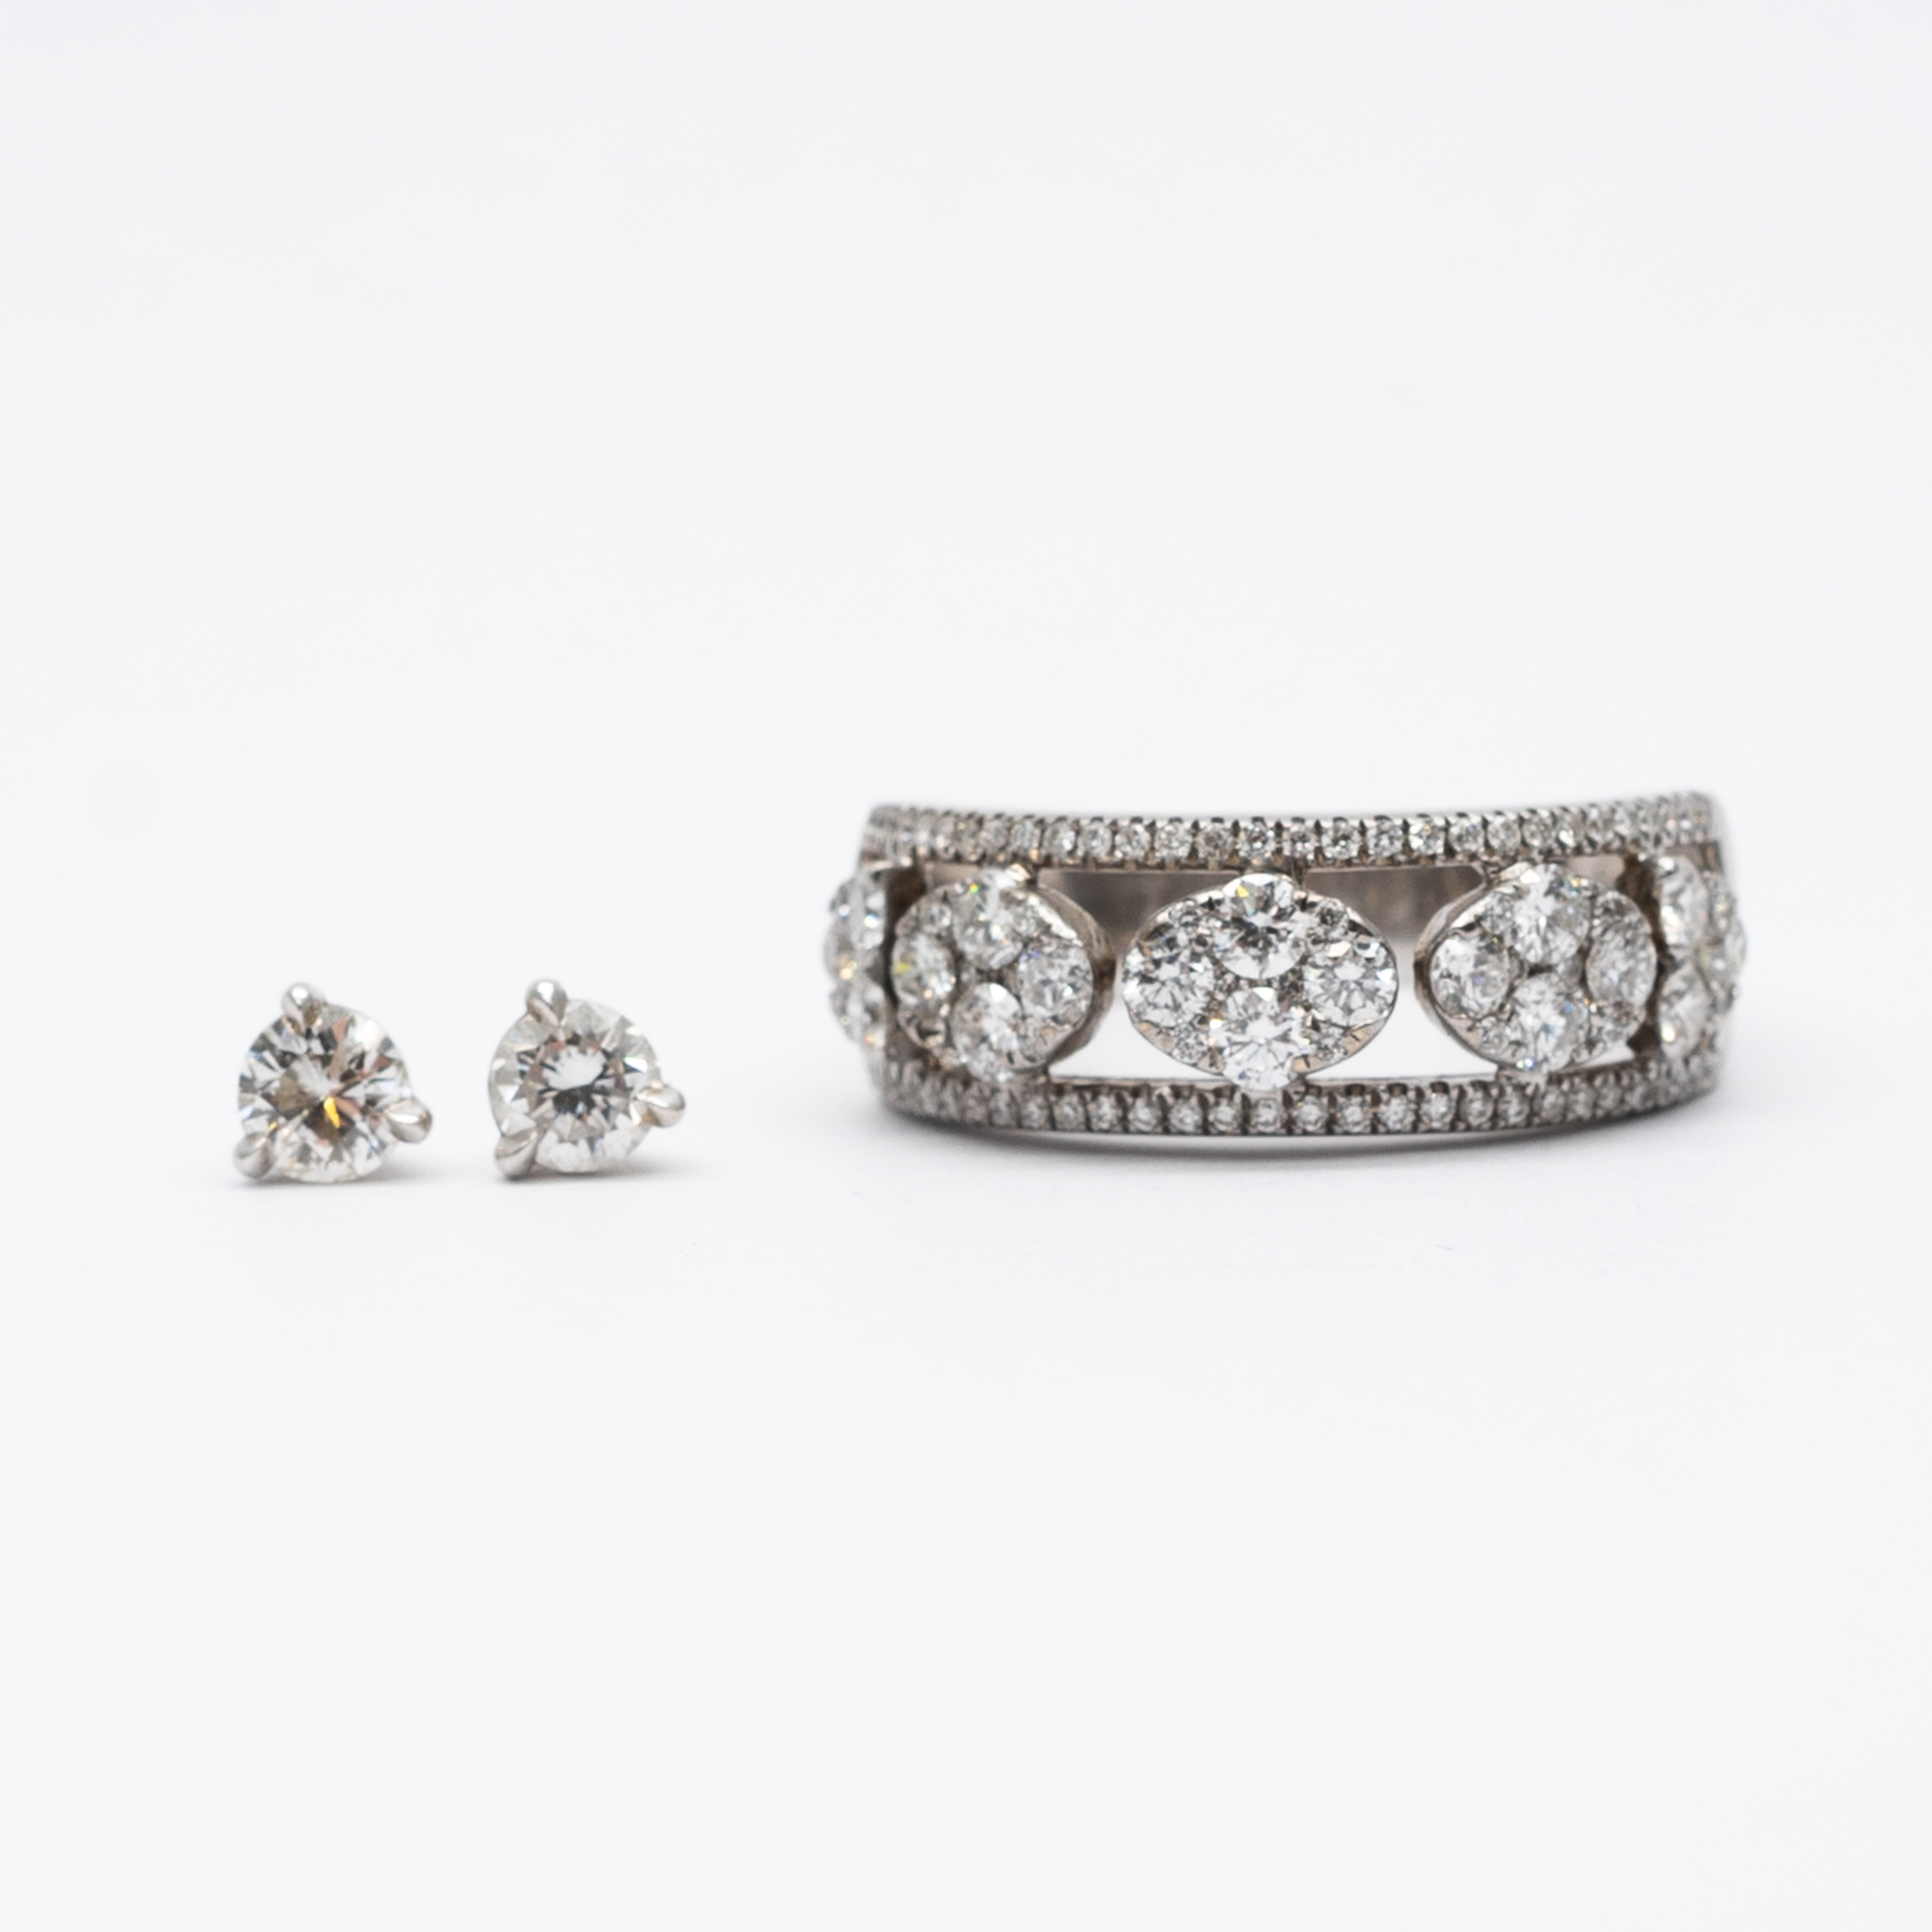 An 18ct white gold diamond dress ring and diamond stud earrings